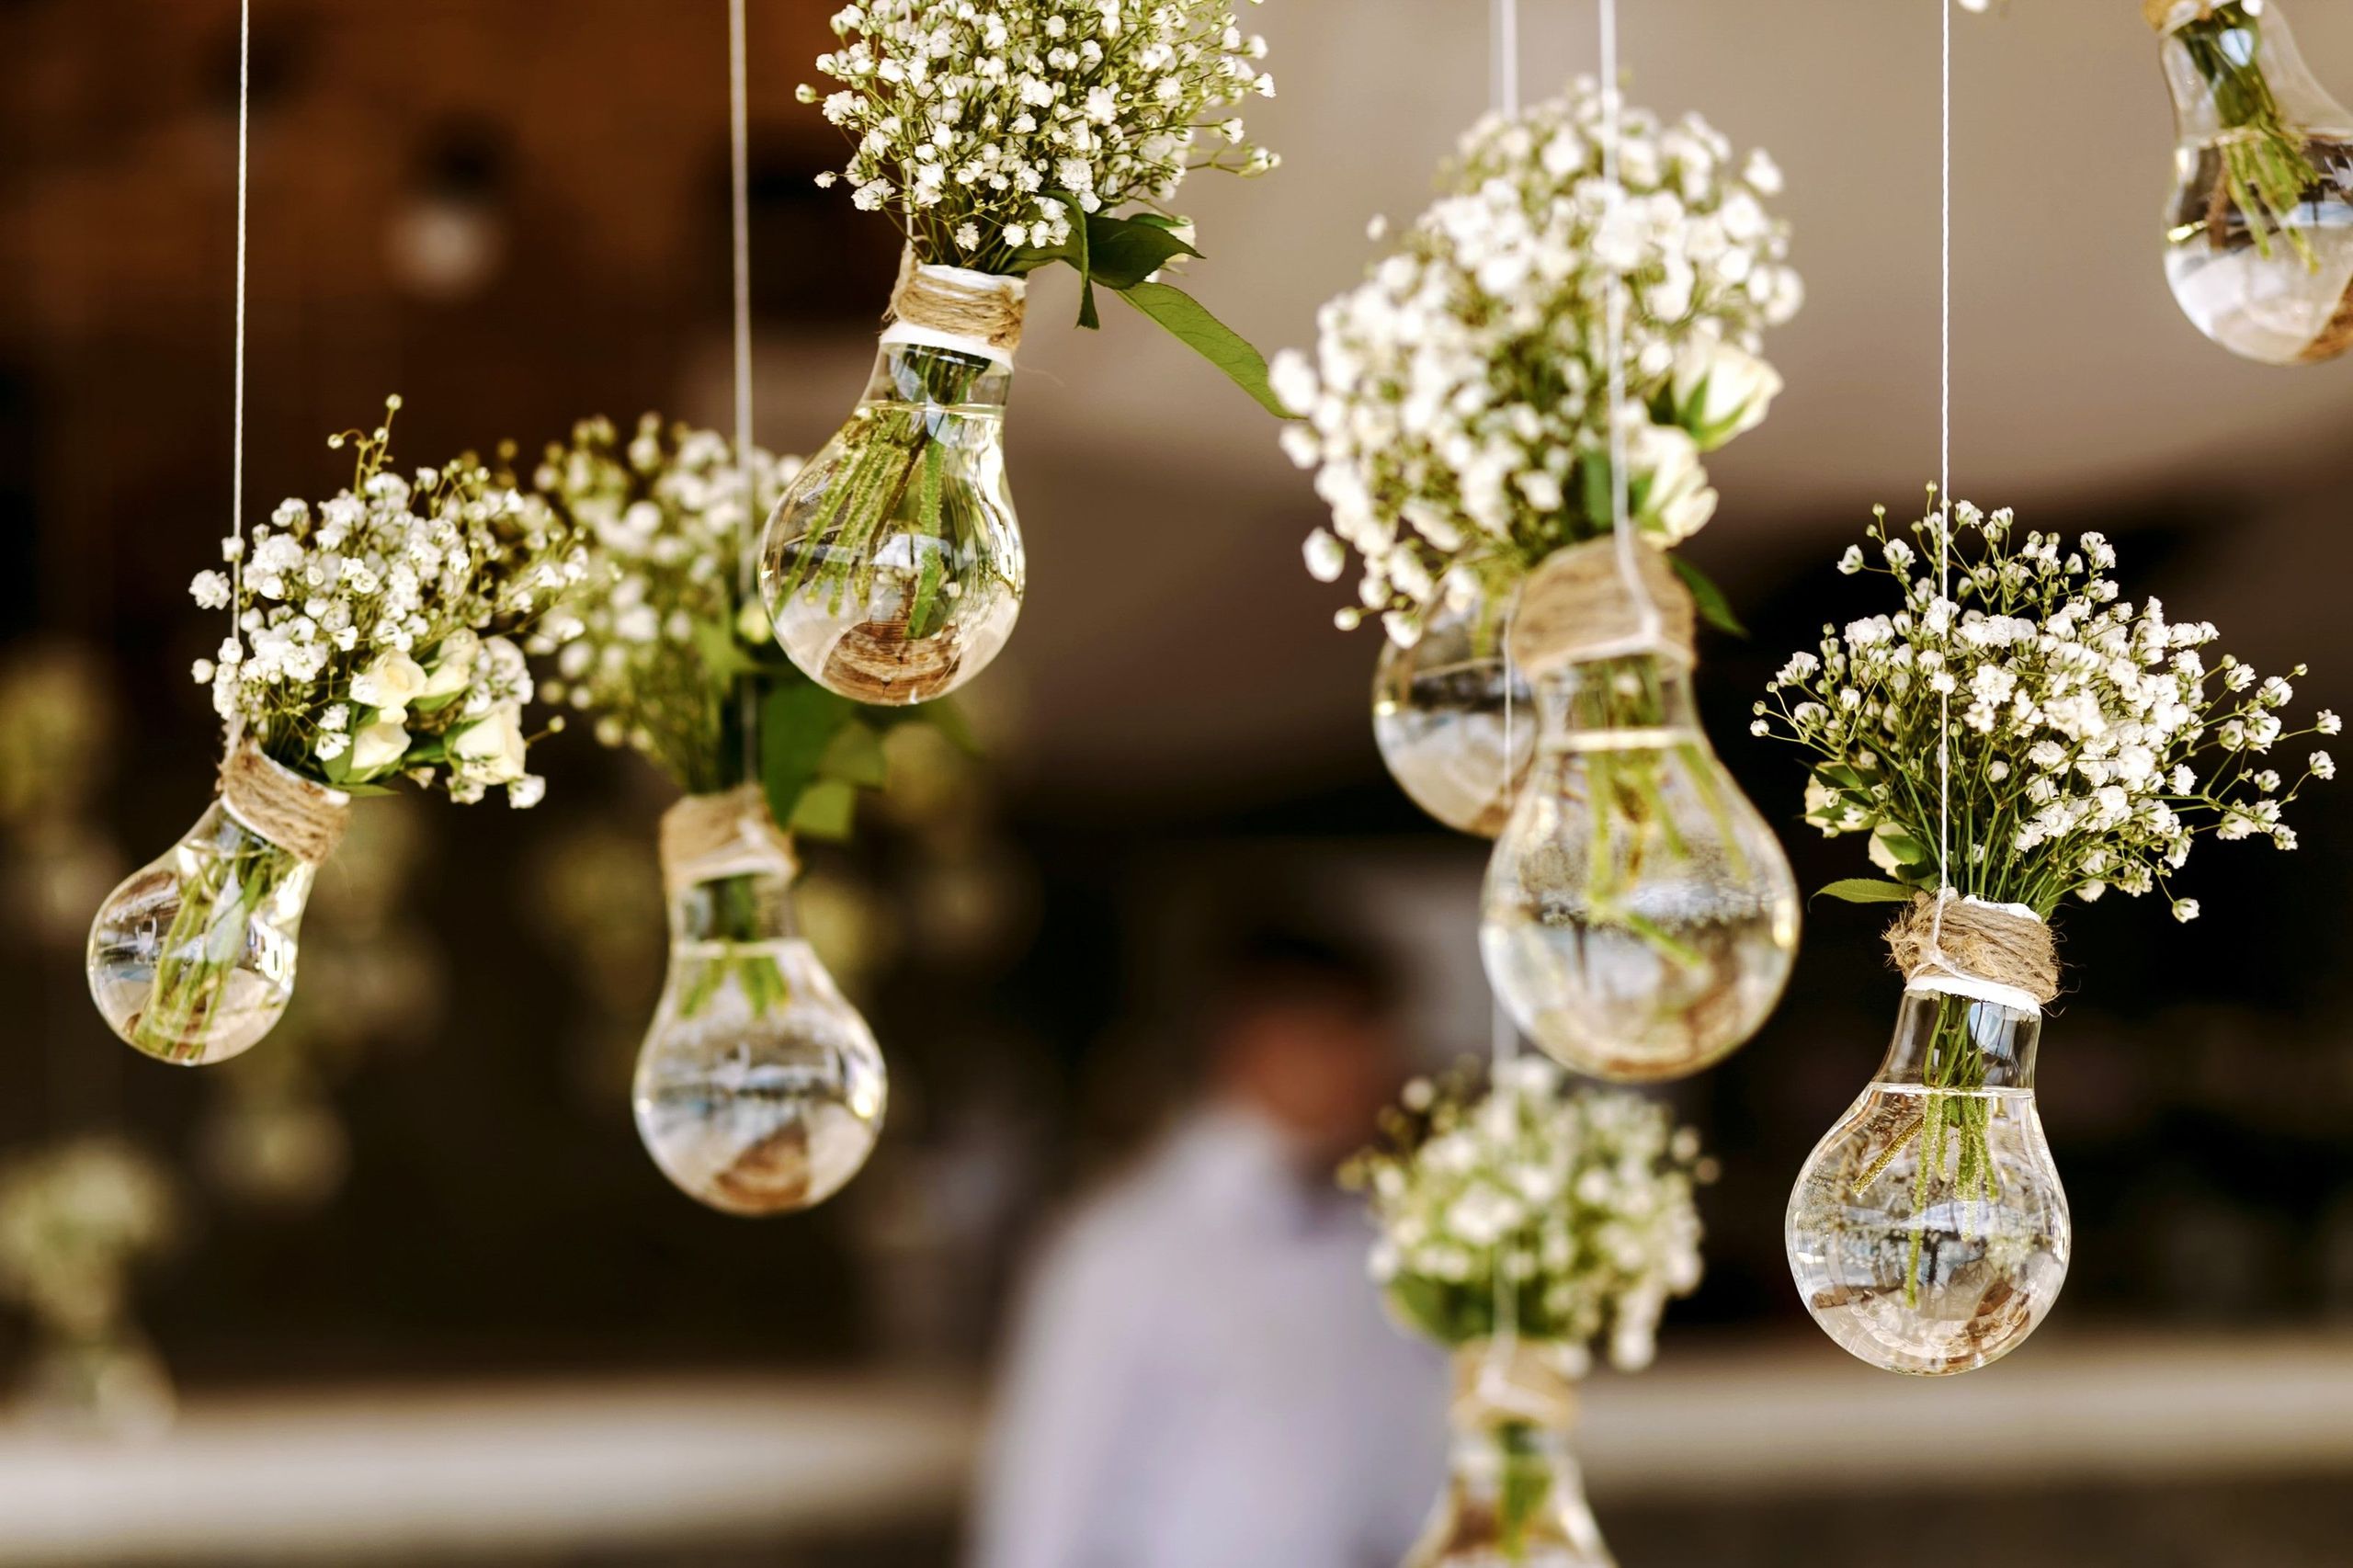 SHR_Weddings-floral decoration_shutterstock_354527417.jpeg